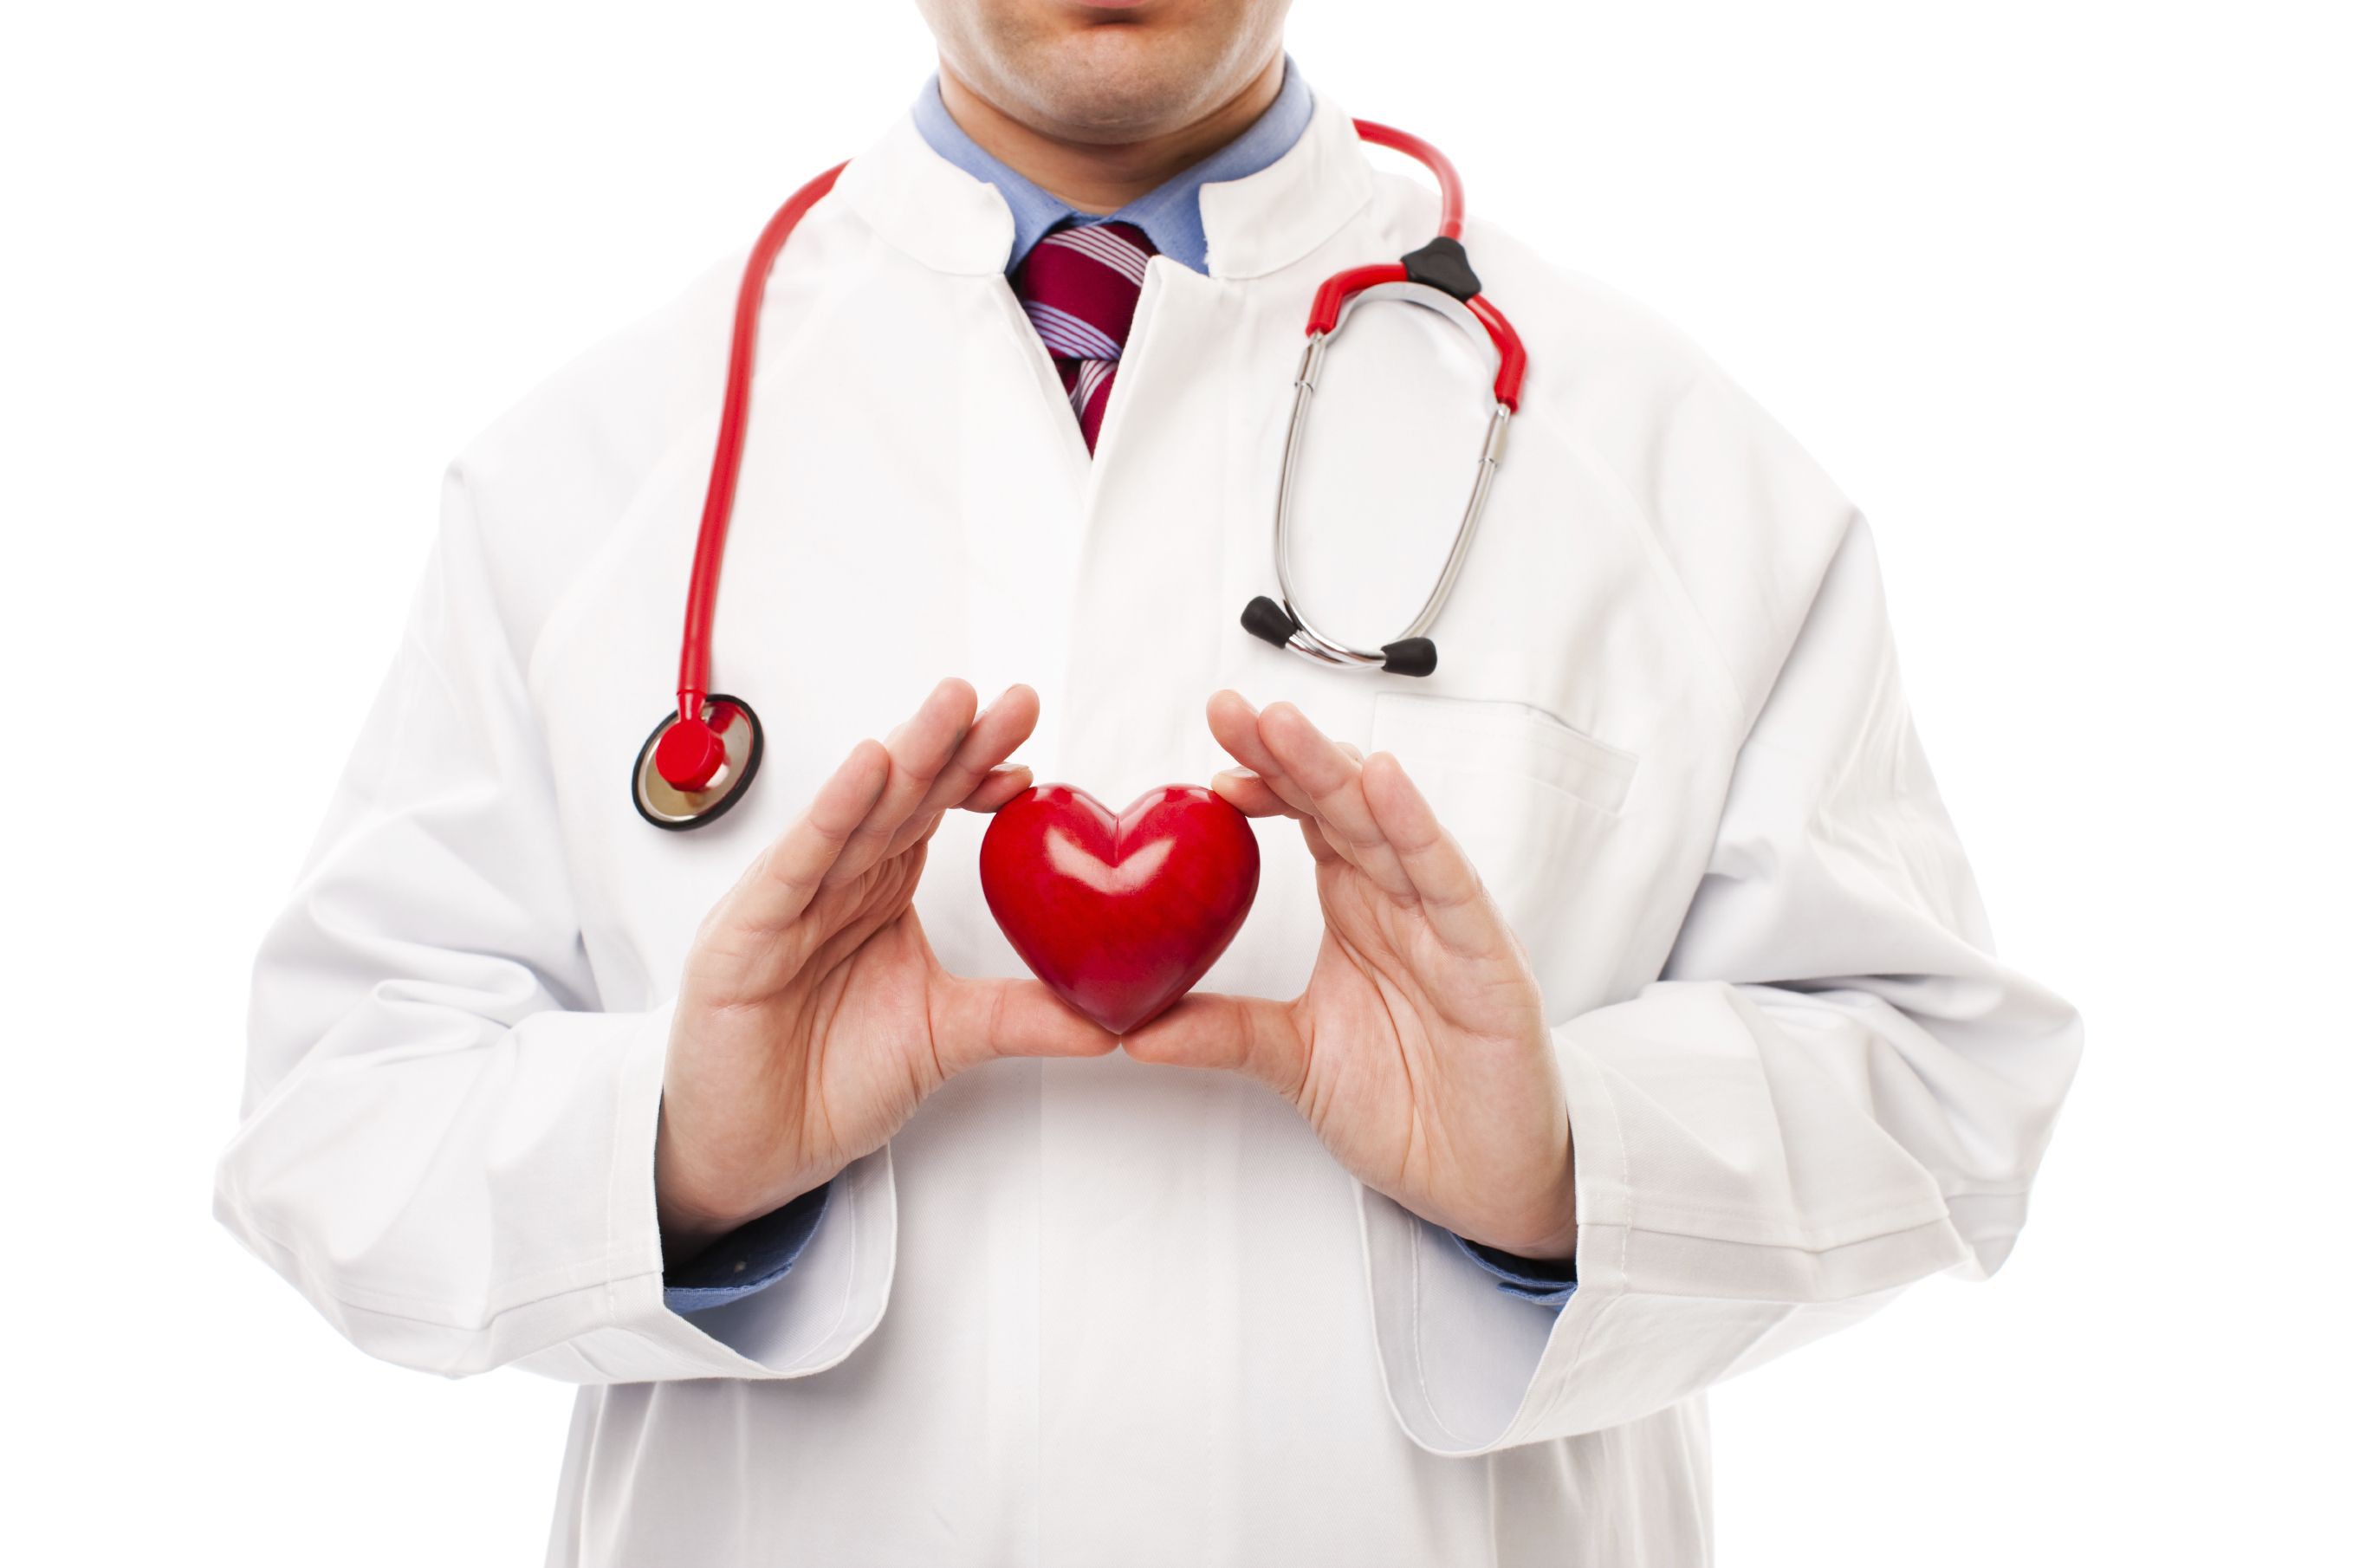 Сердце человека и доктор. Сердце в руках врача. Врач с сердечком. Доктор сердце. Сердце кардиолог.